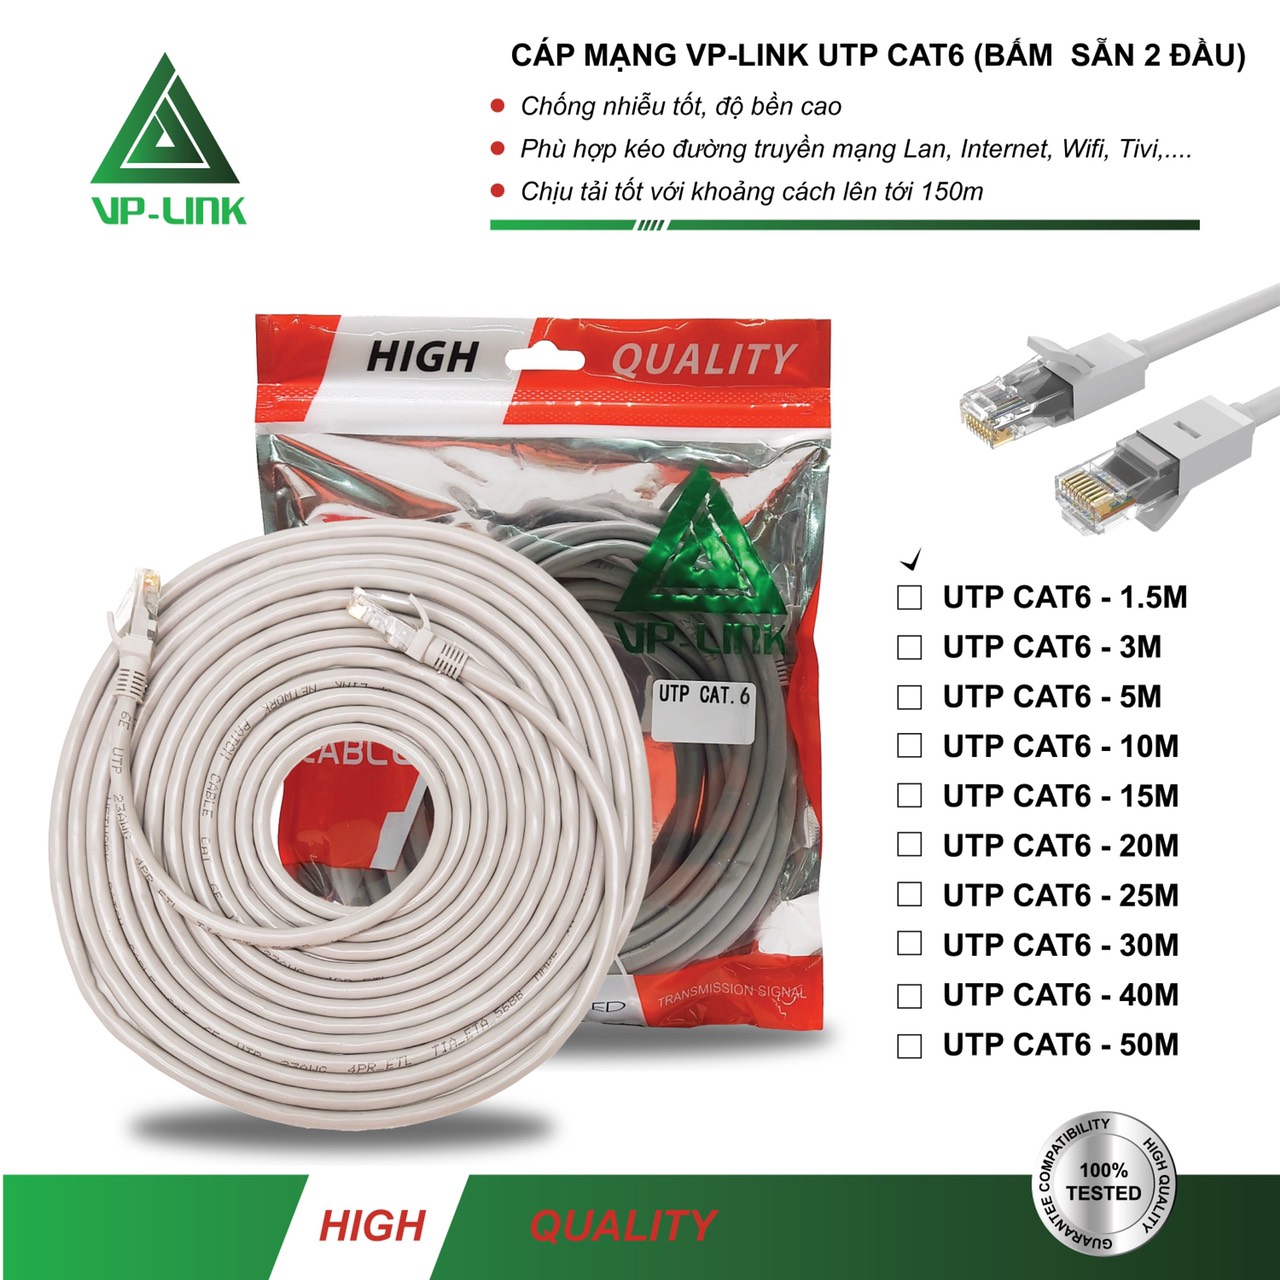 Cable LAN VP-LINK UTP CAT6 25m Bấm sẵn 2 đầu